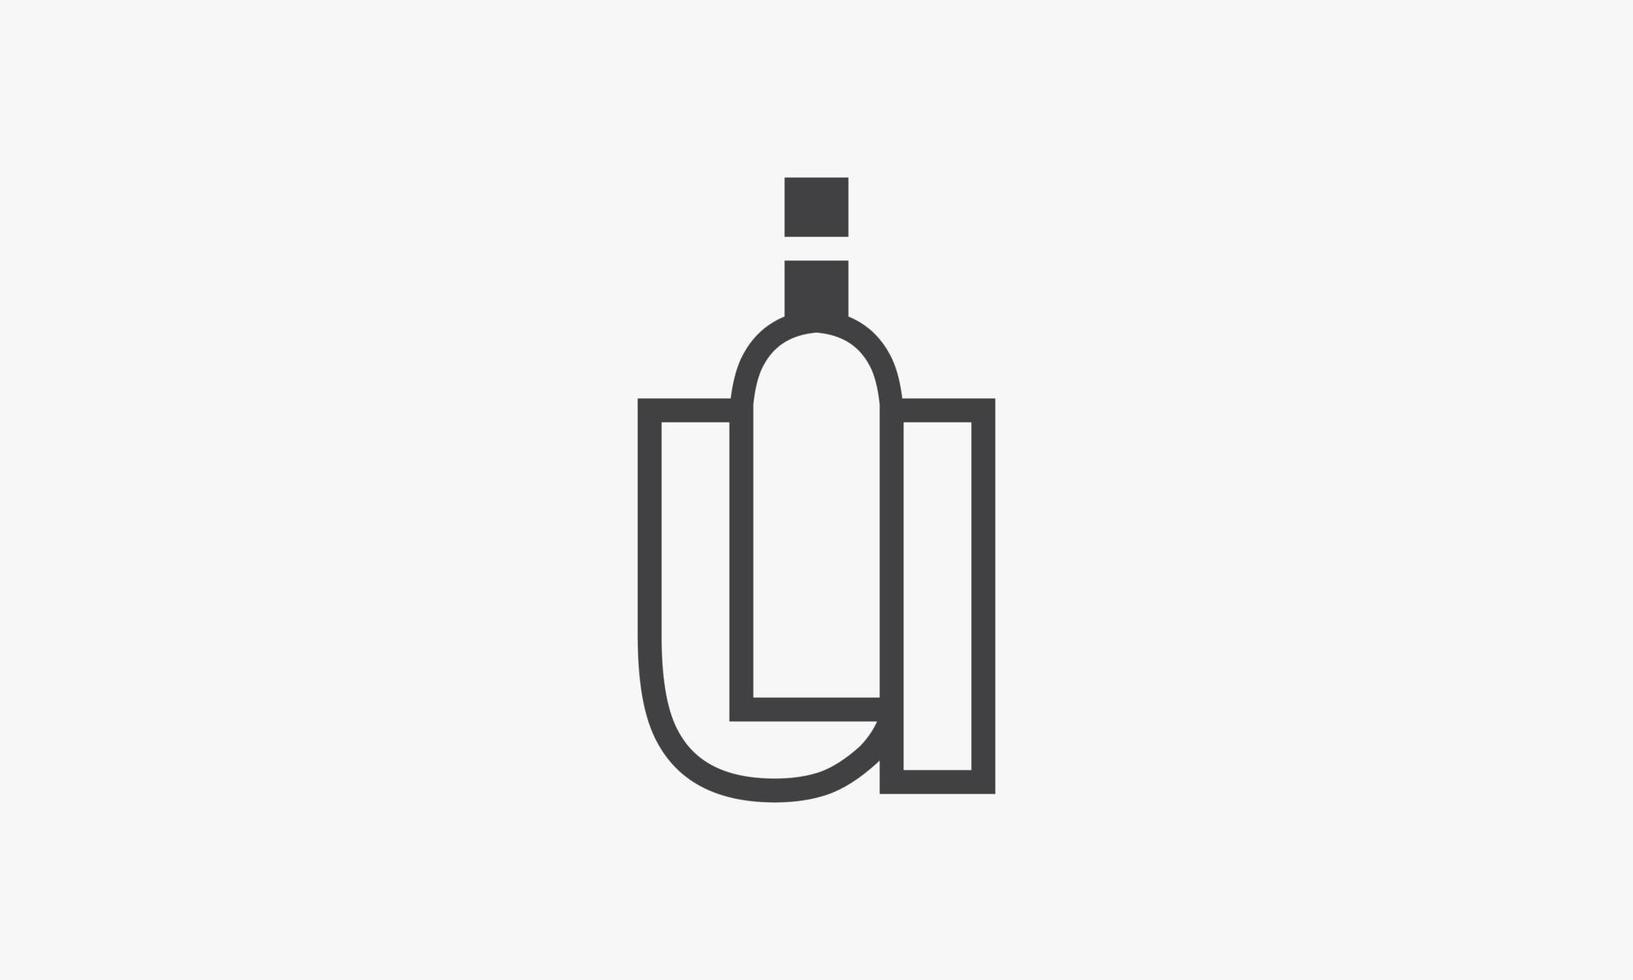 bottle letter U logo concept isolated on white background. vector